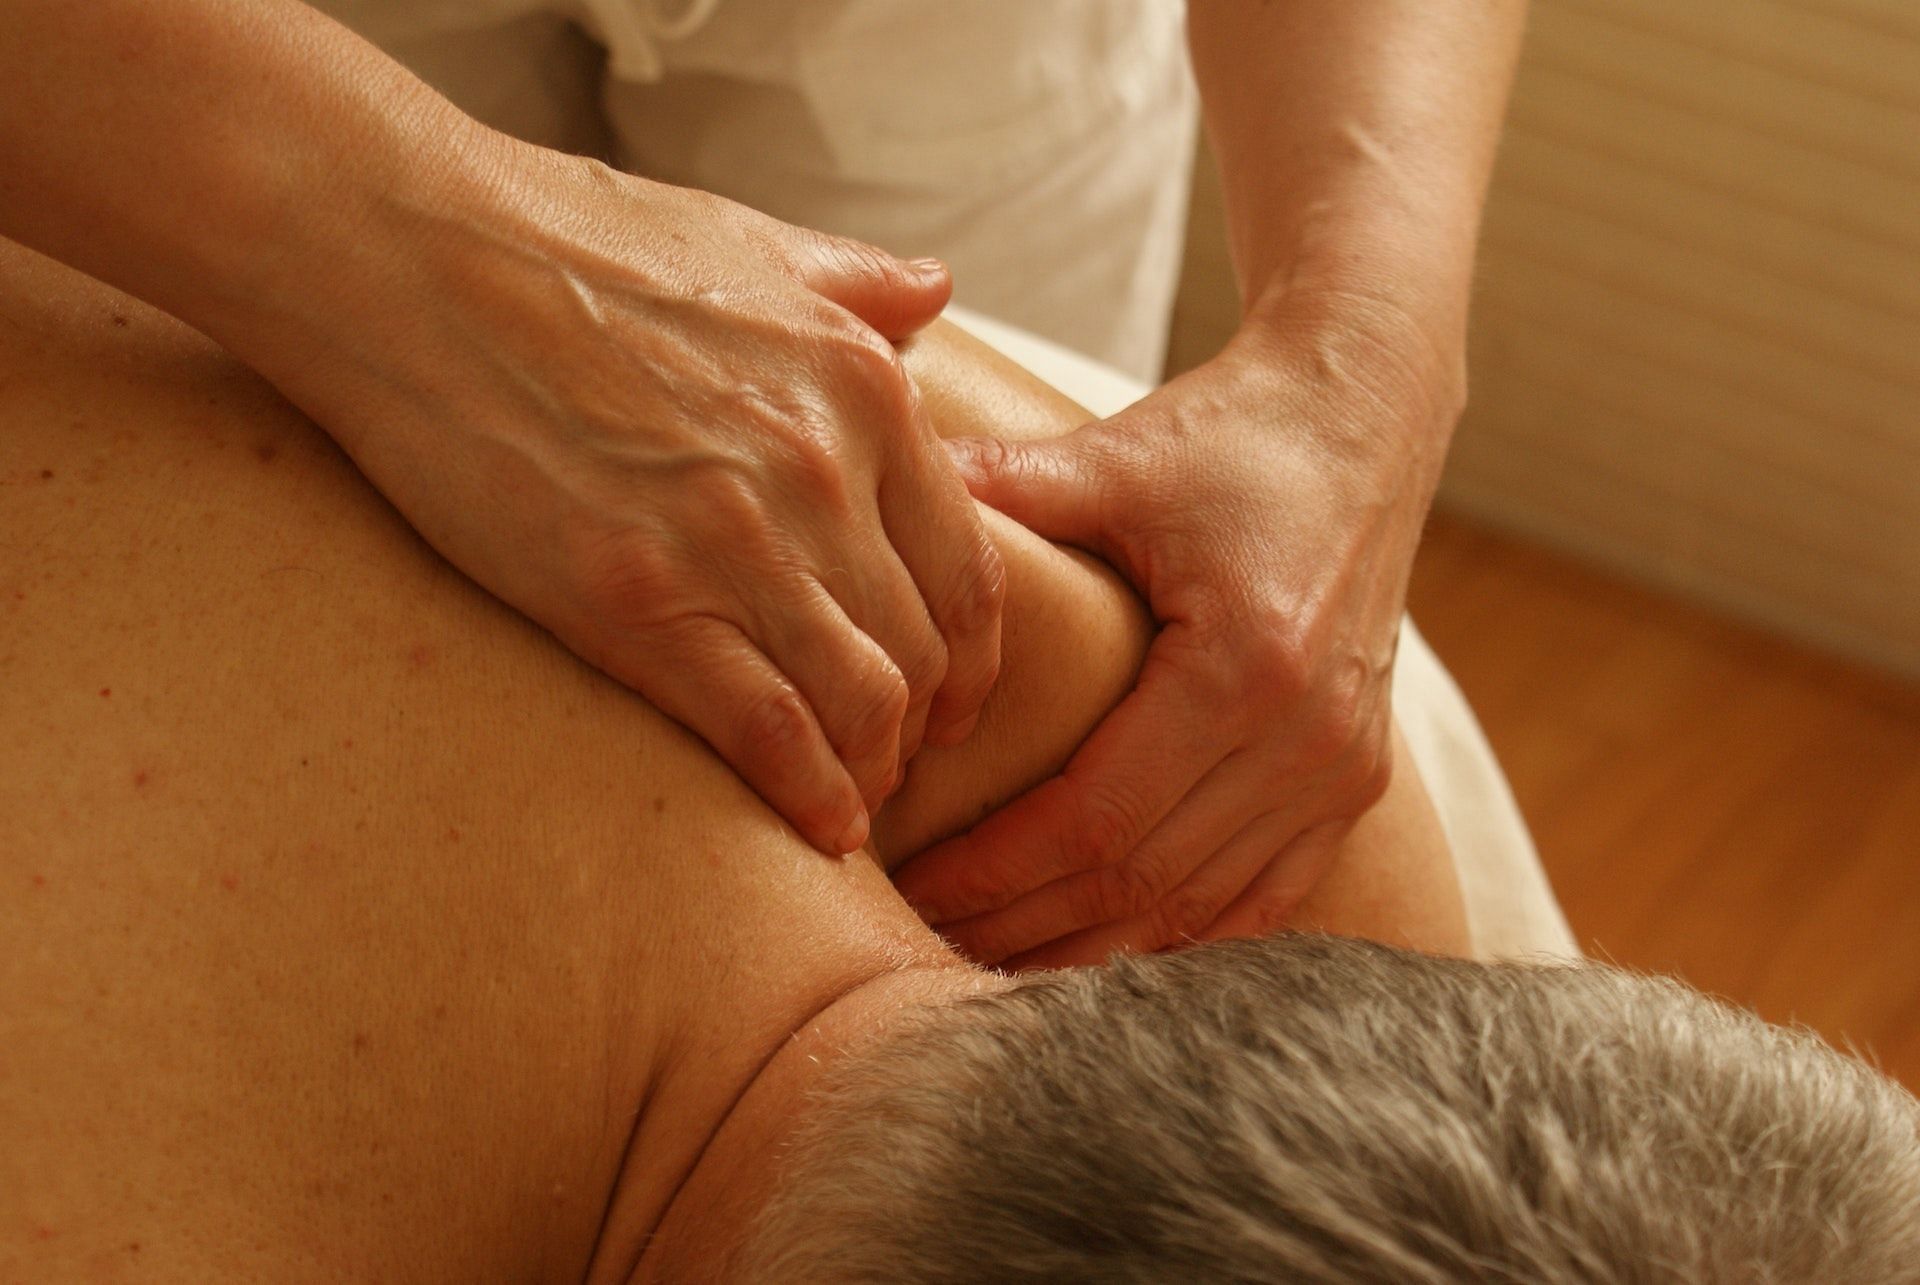 Massage can reduce after-workout soreness. (Photo via Pexels/Pixabay)